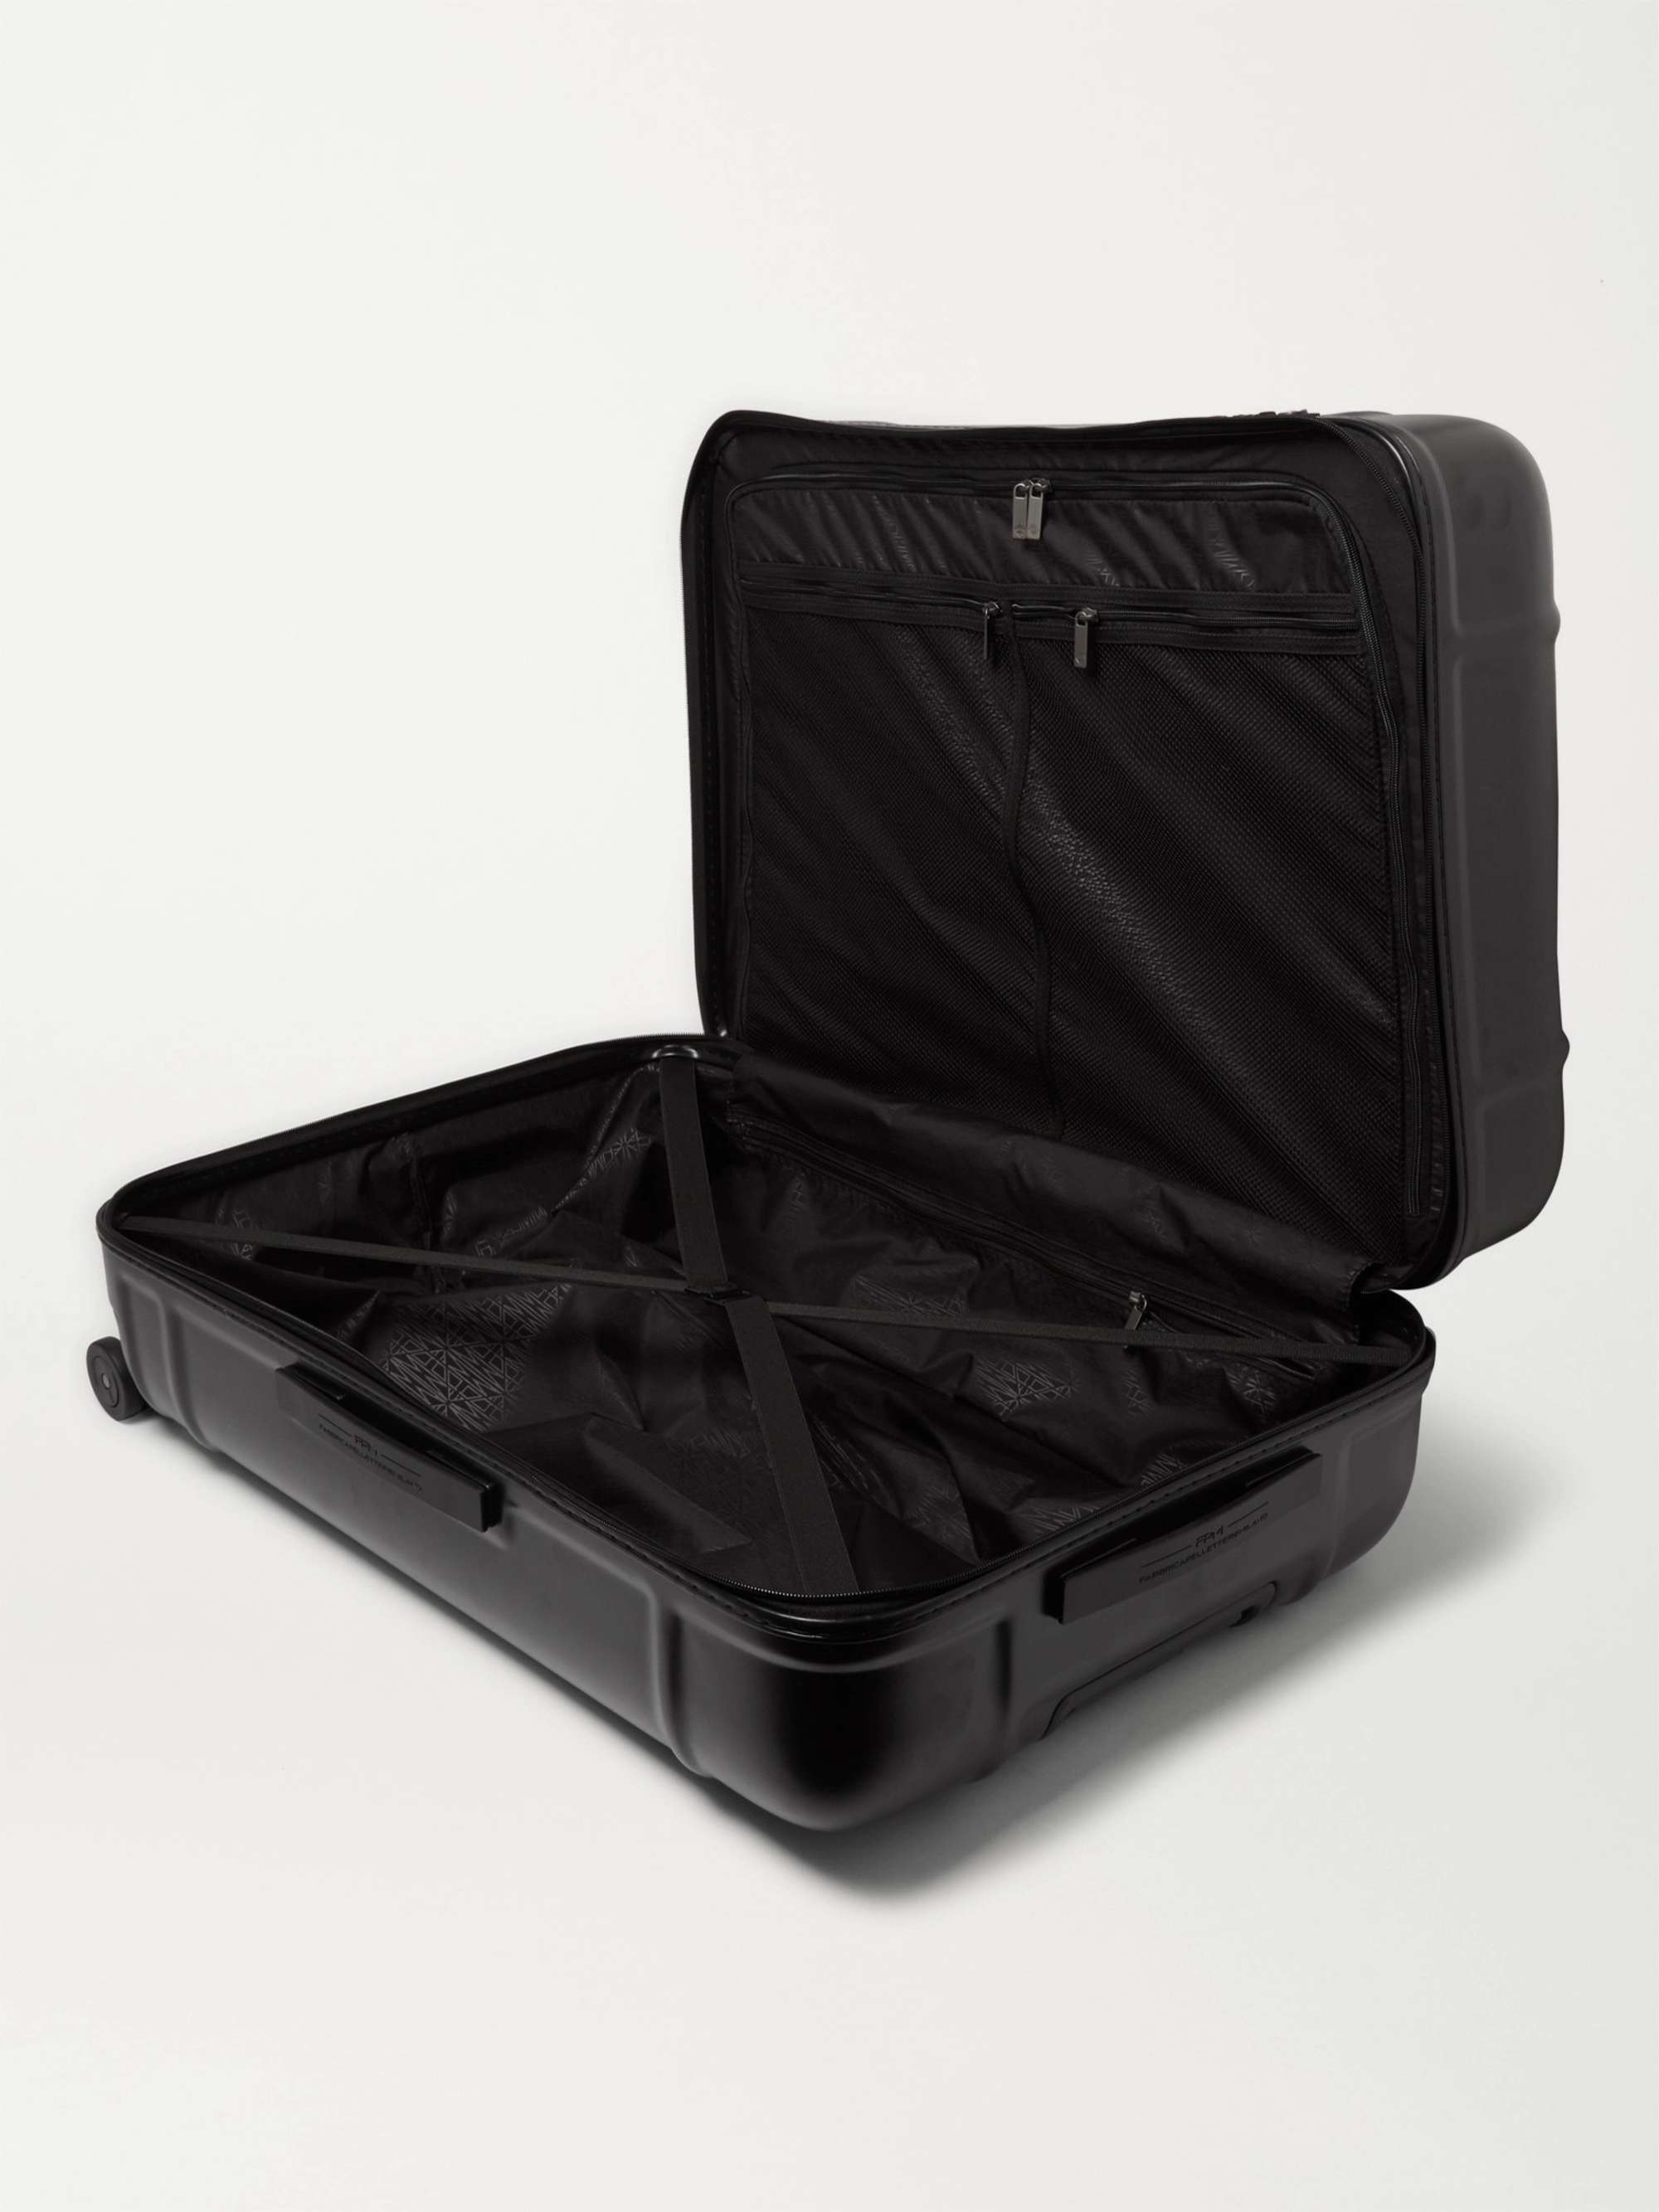 FPM MILANO Globe Spinner 68cm Polycarbonate Suitcase